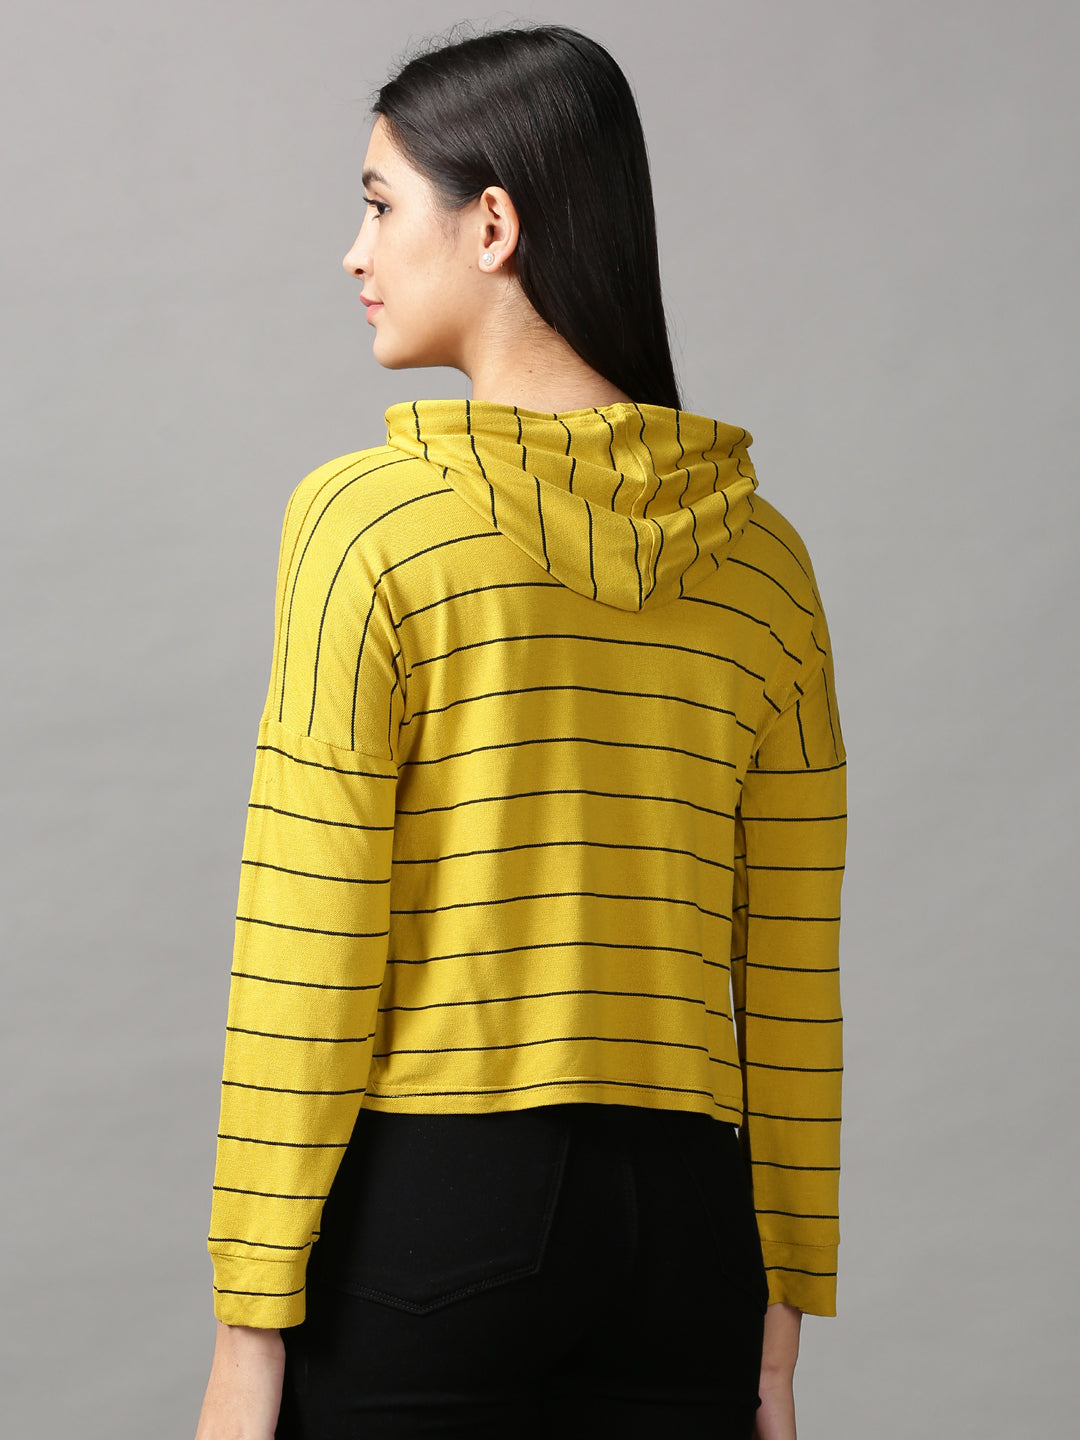 Women's Yellow Striped Crop Top